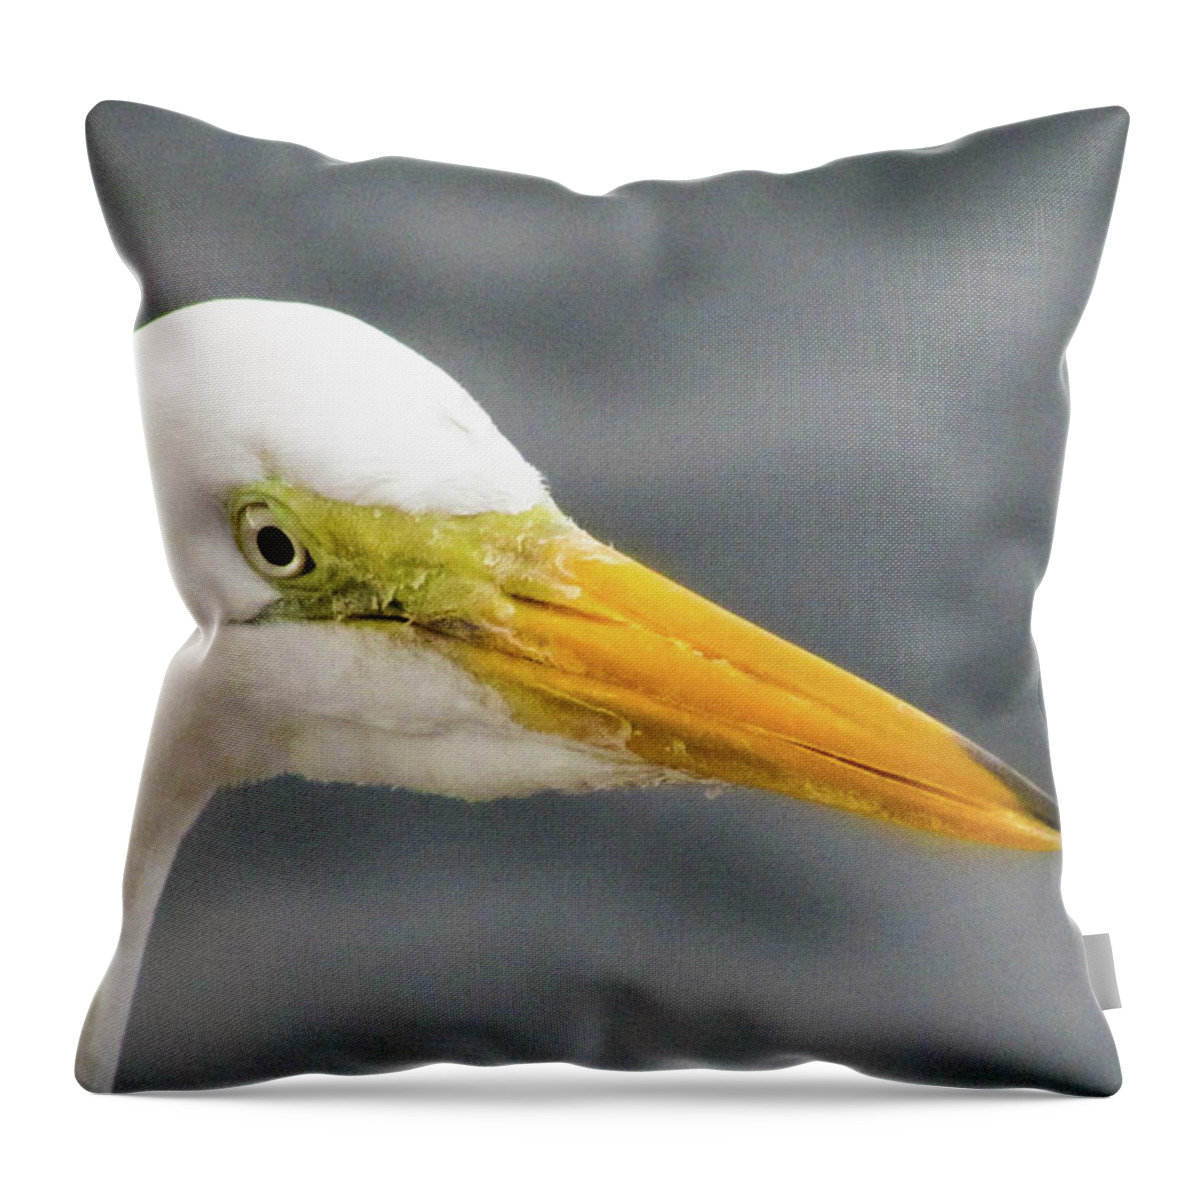 White Throw Pillow featuring the photograph White Bird by Cesar Vieira